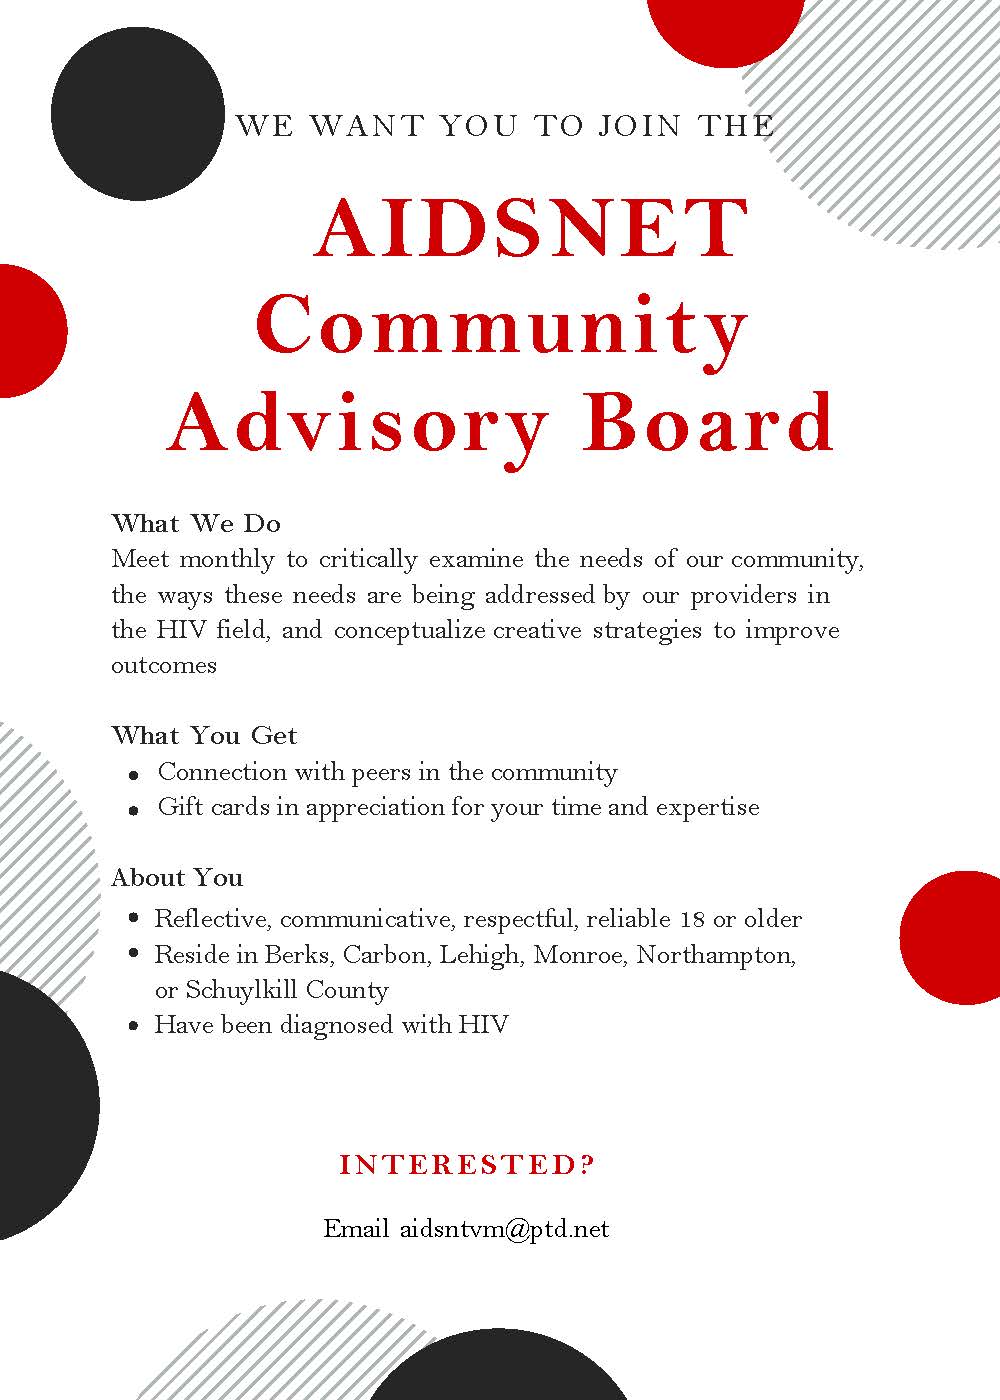 AIDSNET Community Advisory Board Flyer